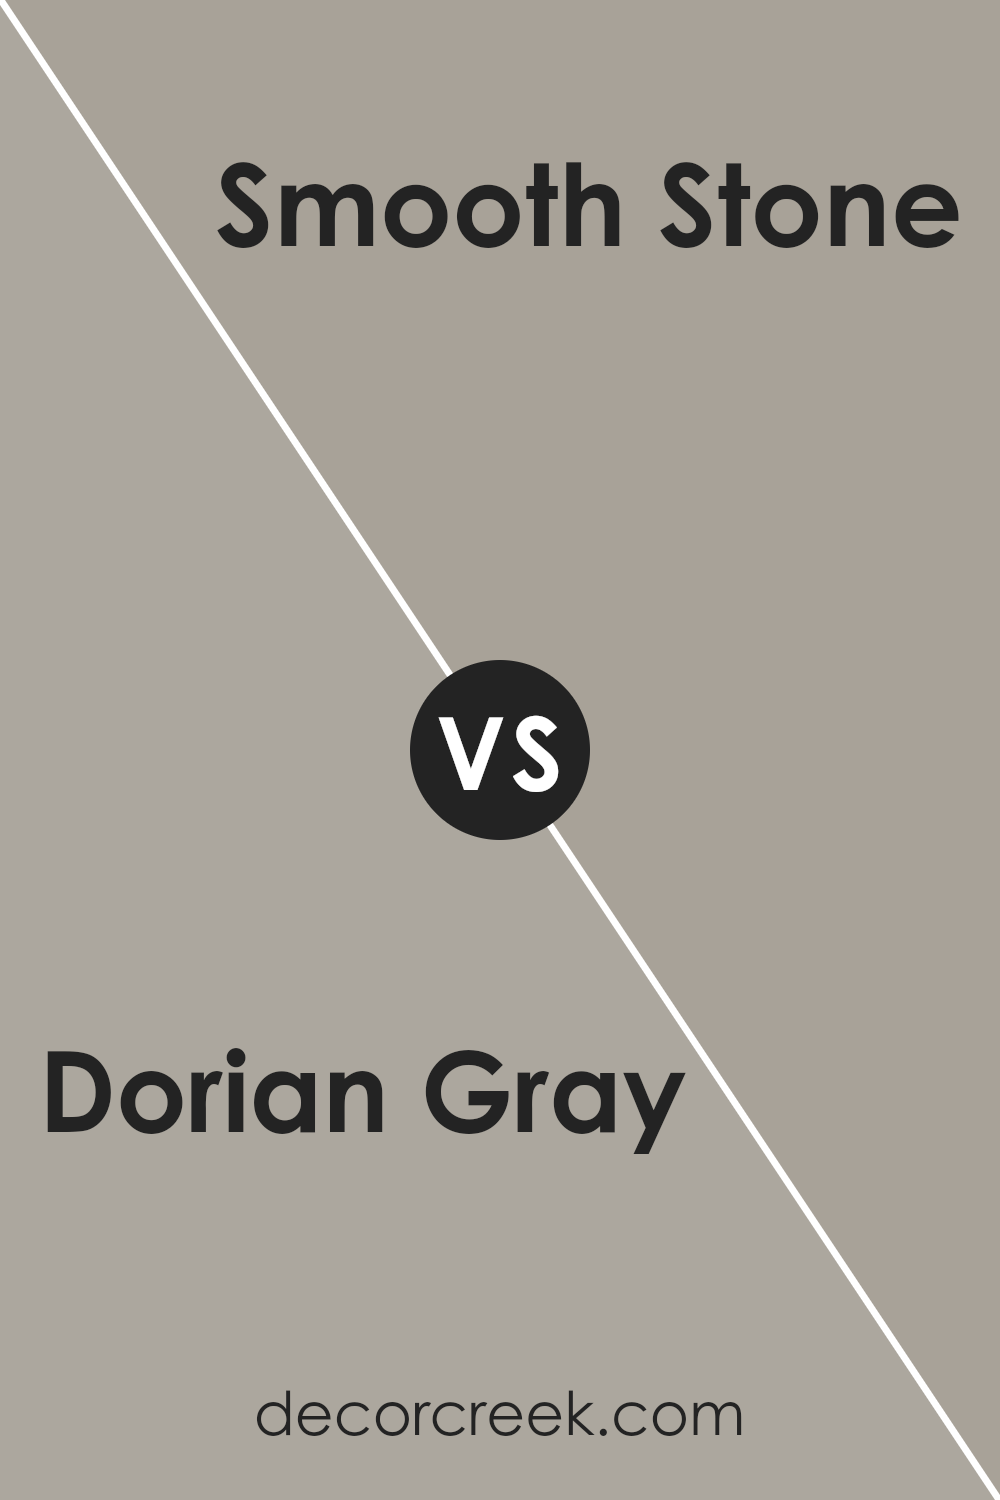 dorian_gray_sw_7017_vs_smooth_stone_sw_9568